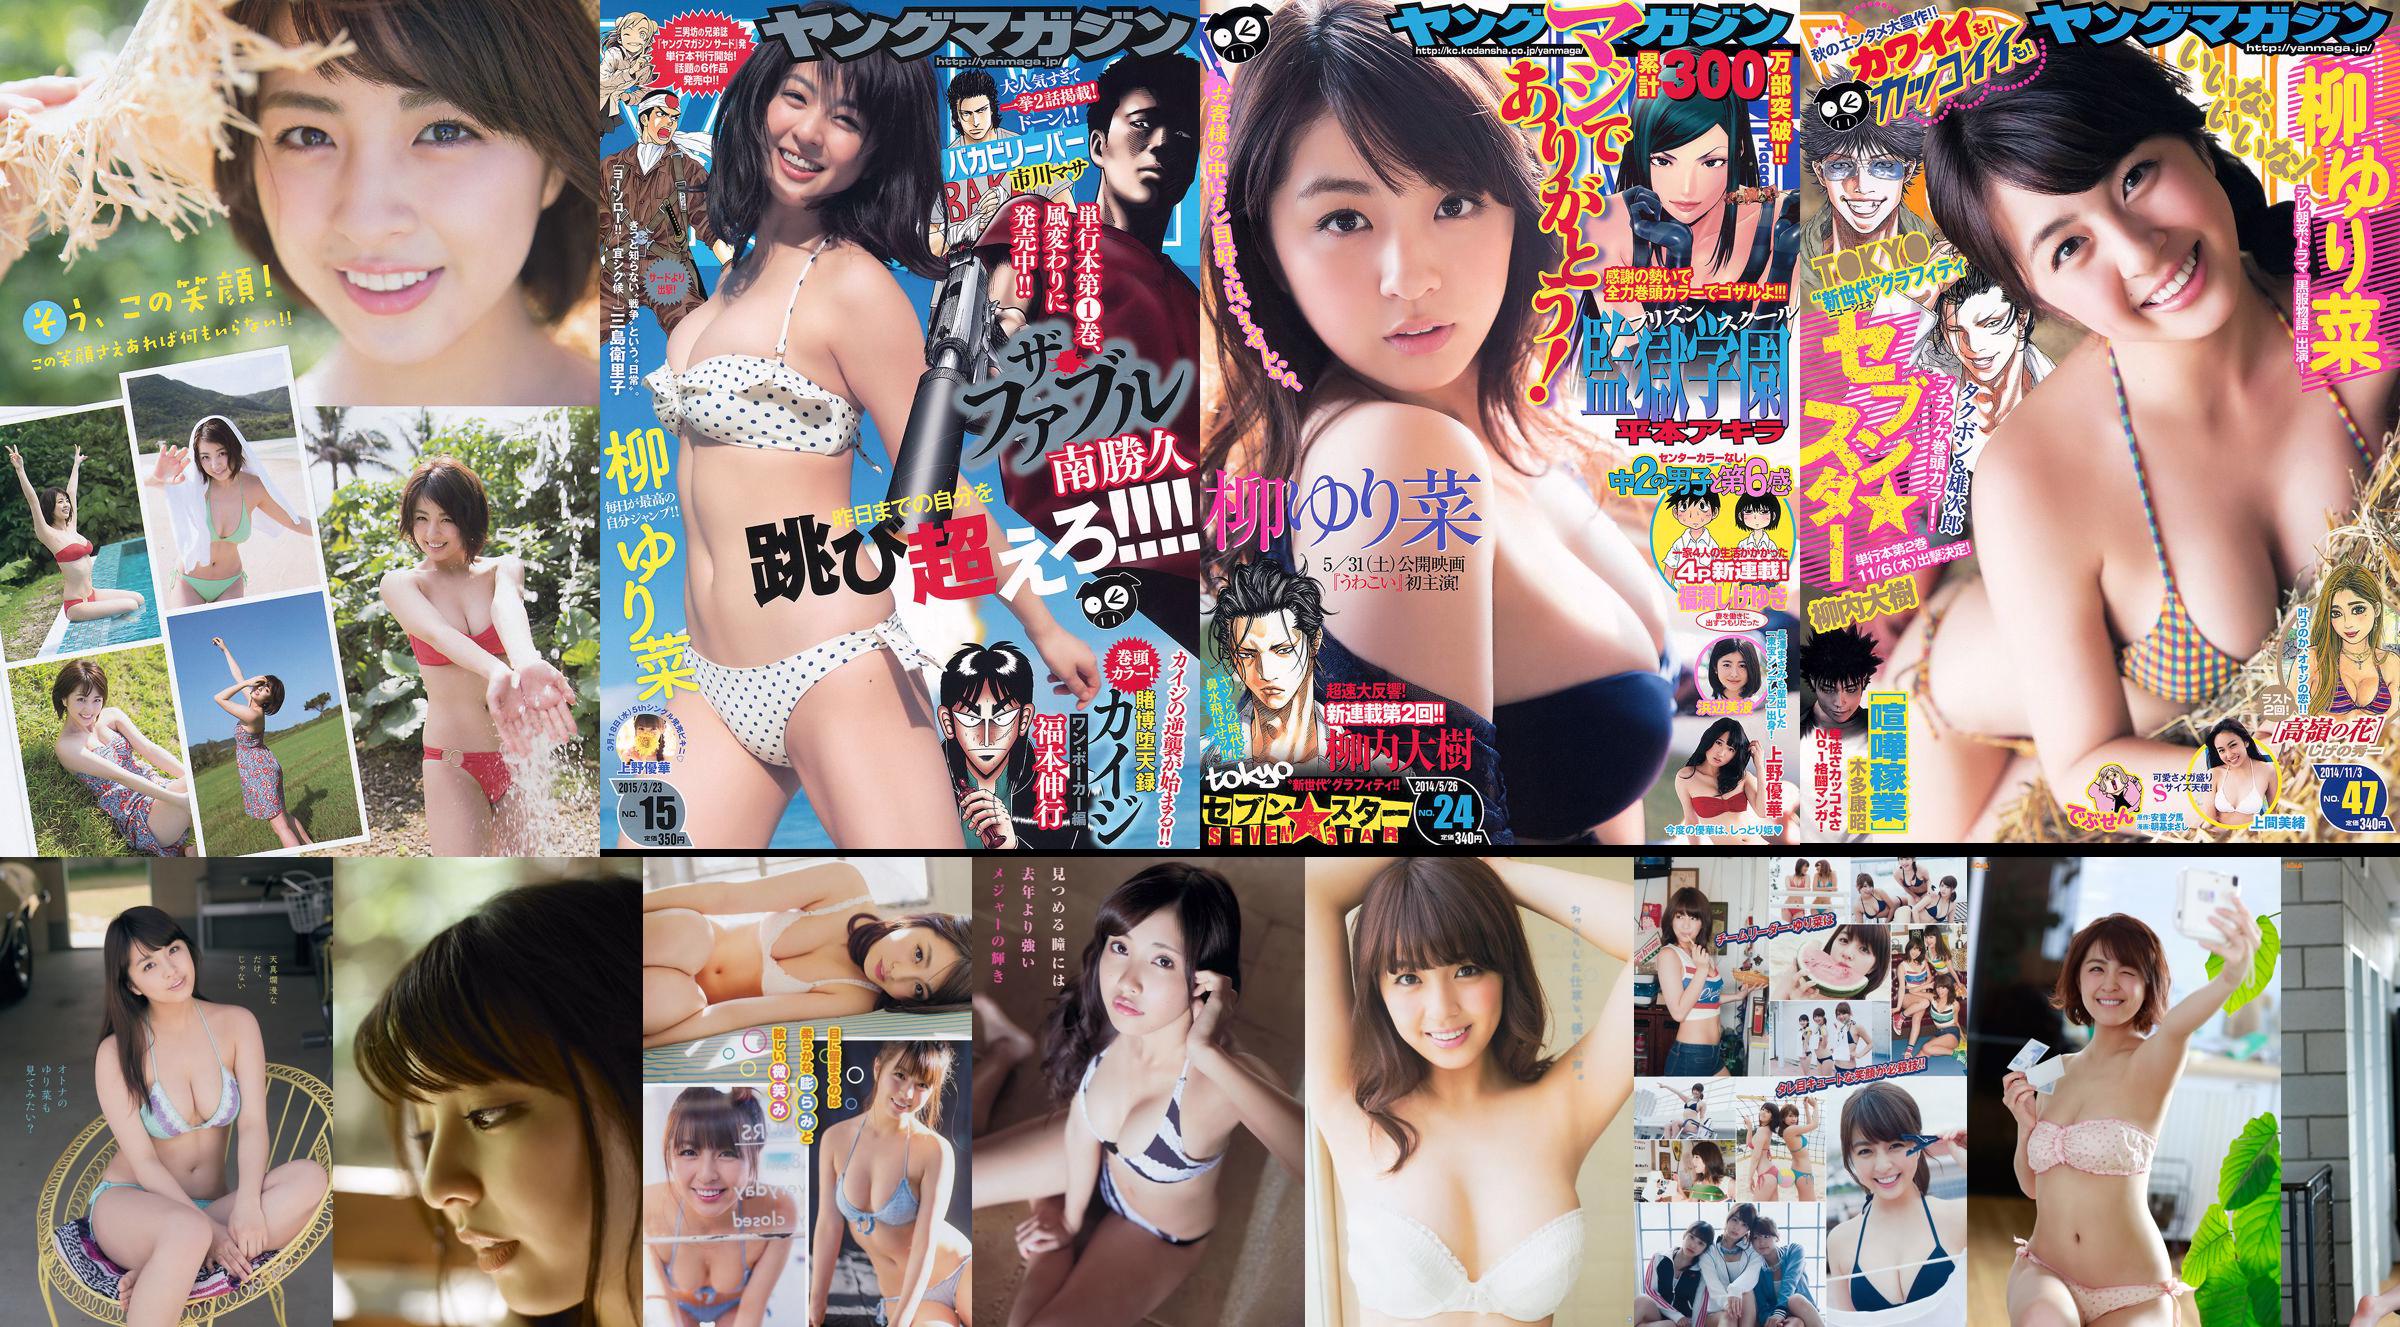 [Young Magazine] Rina Yanagi Mio Uema 2014 No.47 Photo Magazine No.094298 หน้า 1